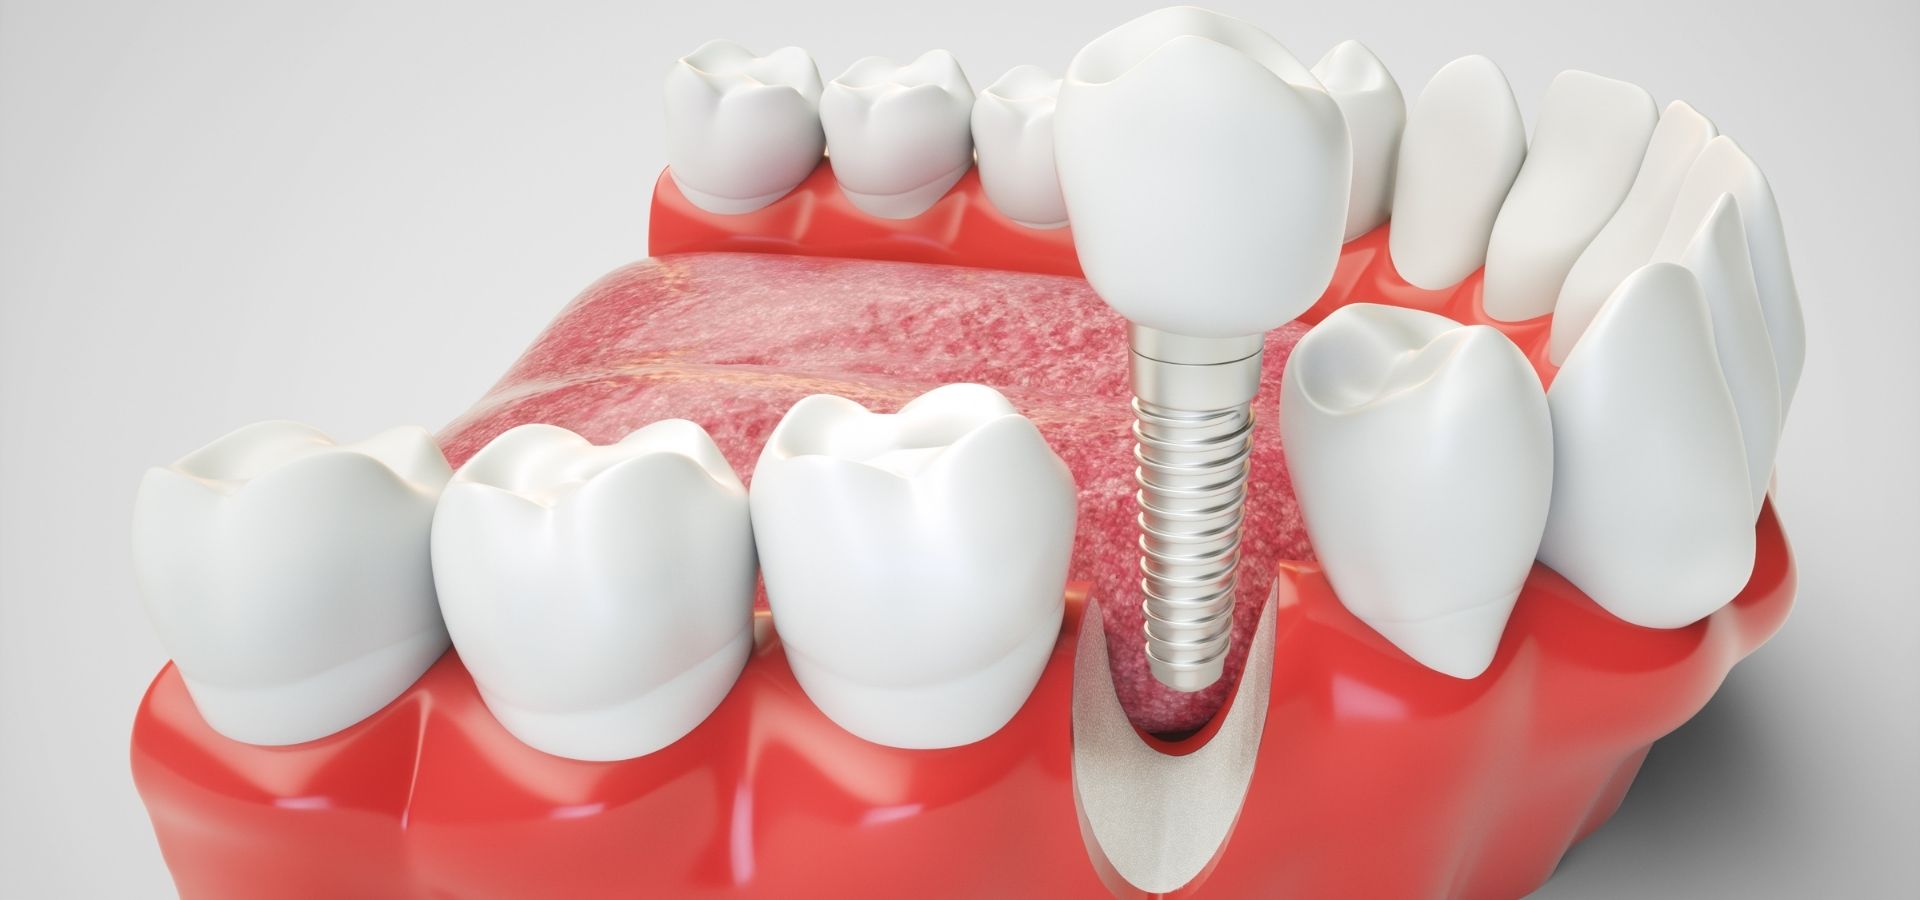 image of Dental implant treatment in bilbao ibarreta dental